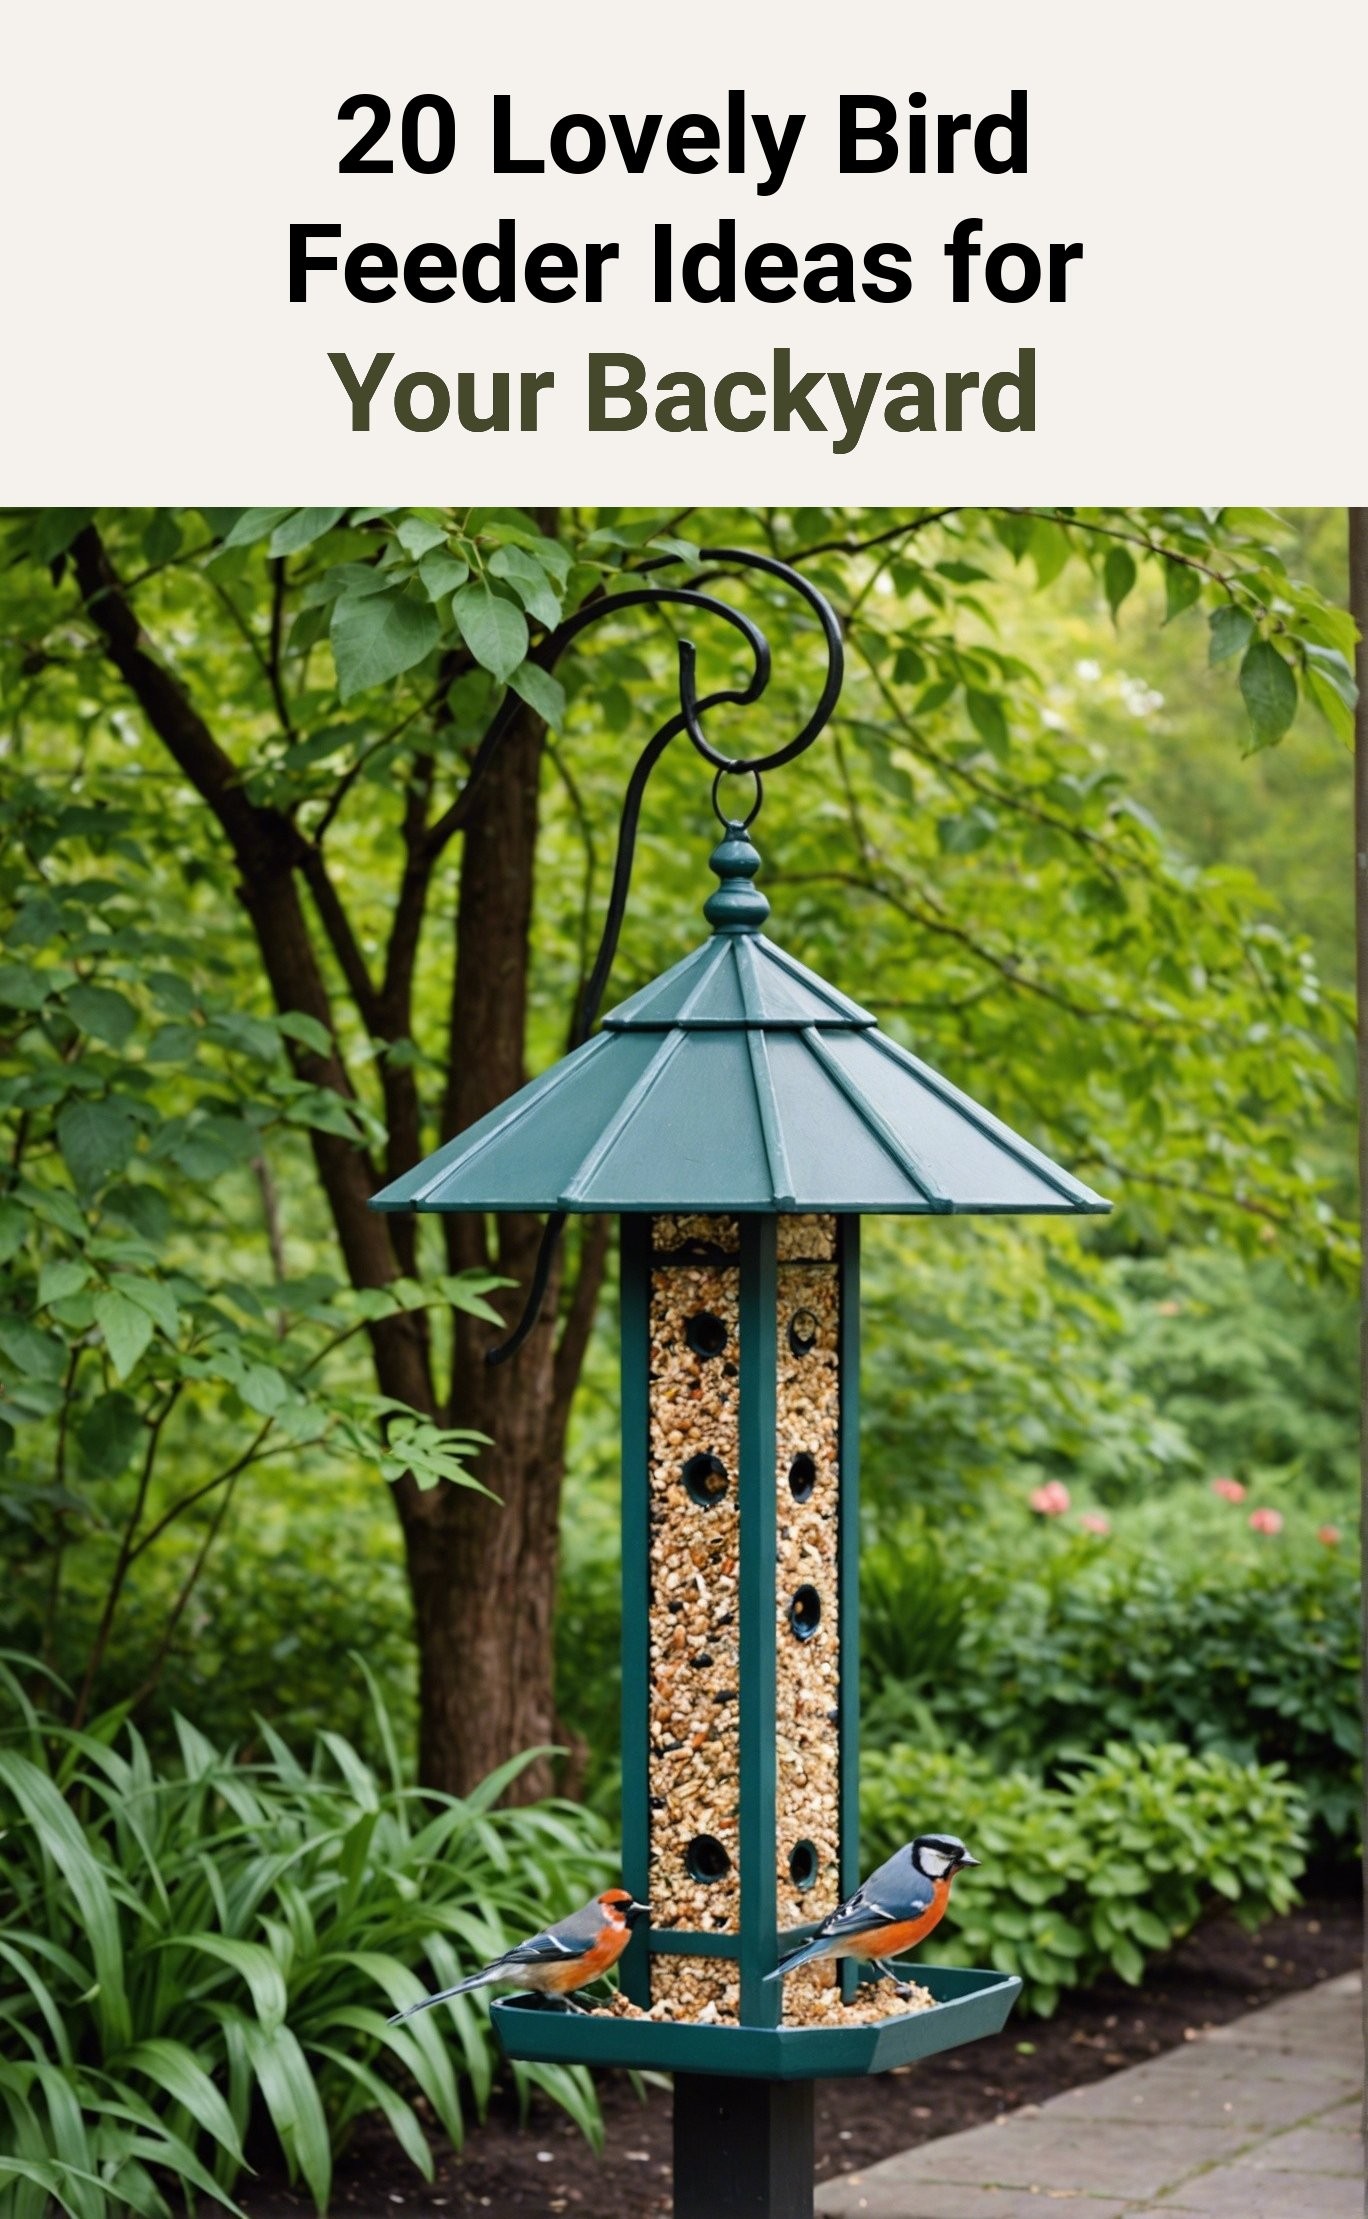 20 Lovely Bird Feeder Ideas for Your Backyard